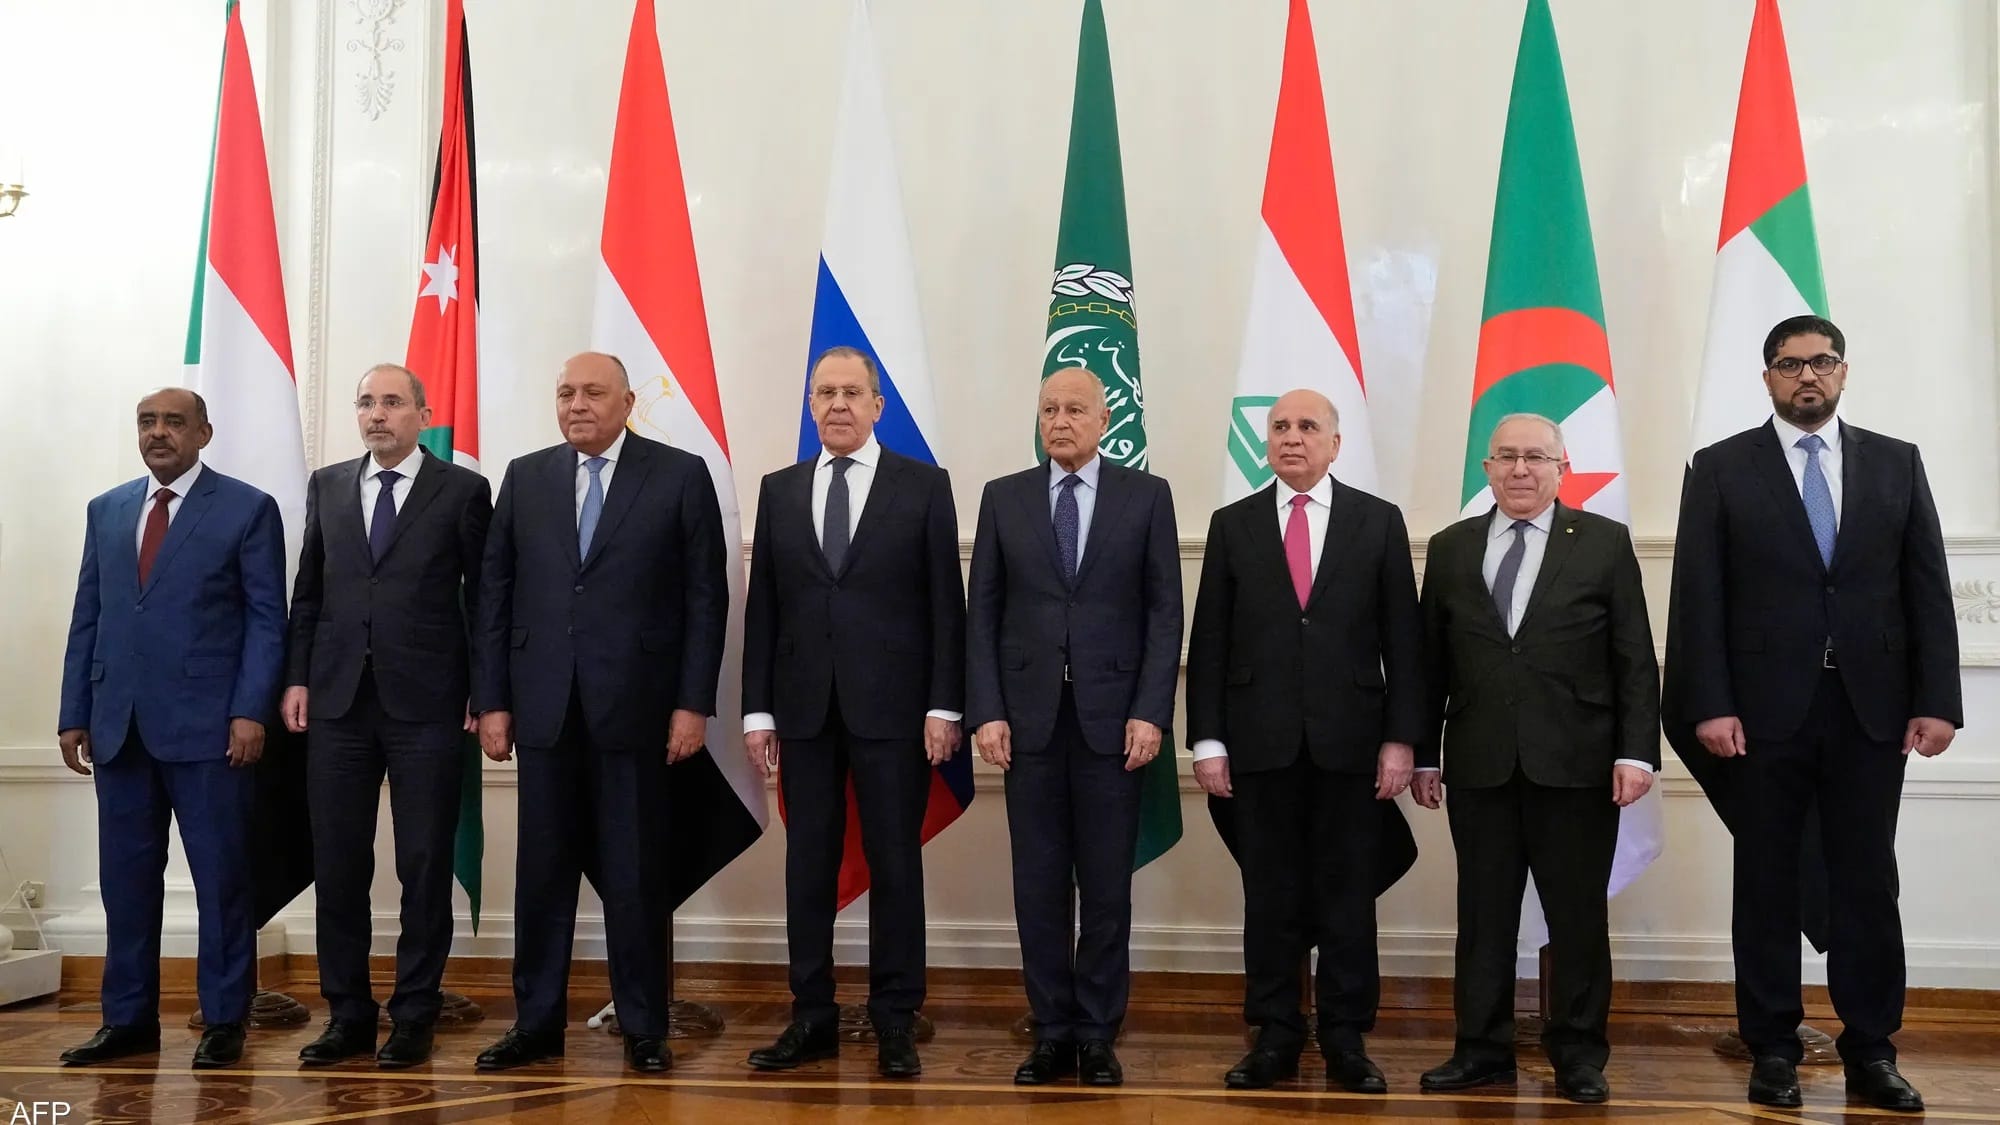 Analyzing the Arab League’s Stance Towards the Ukrainian Crisis